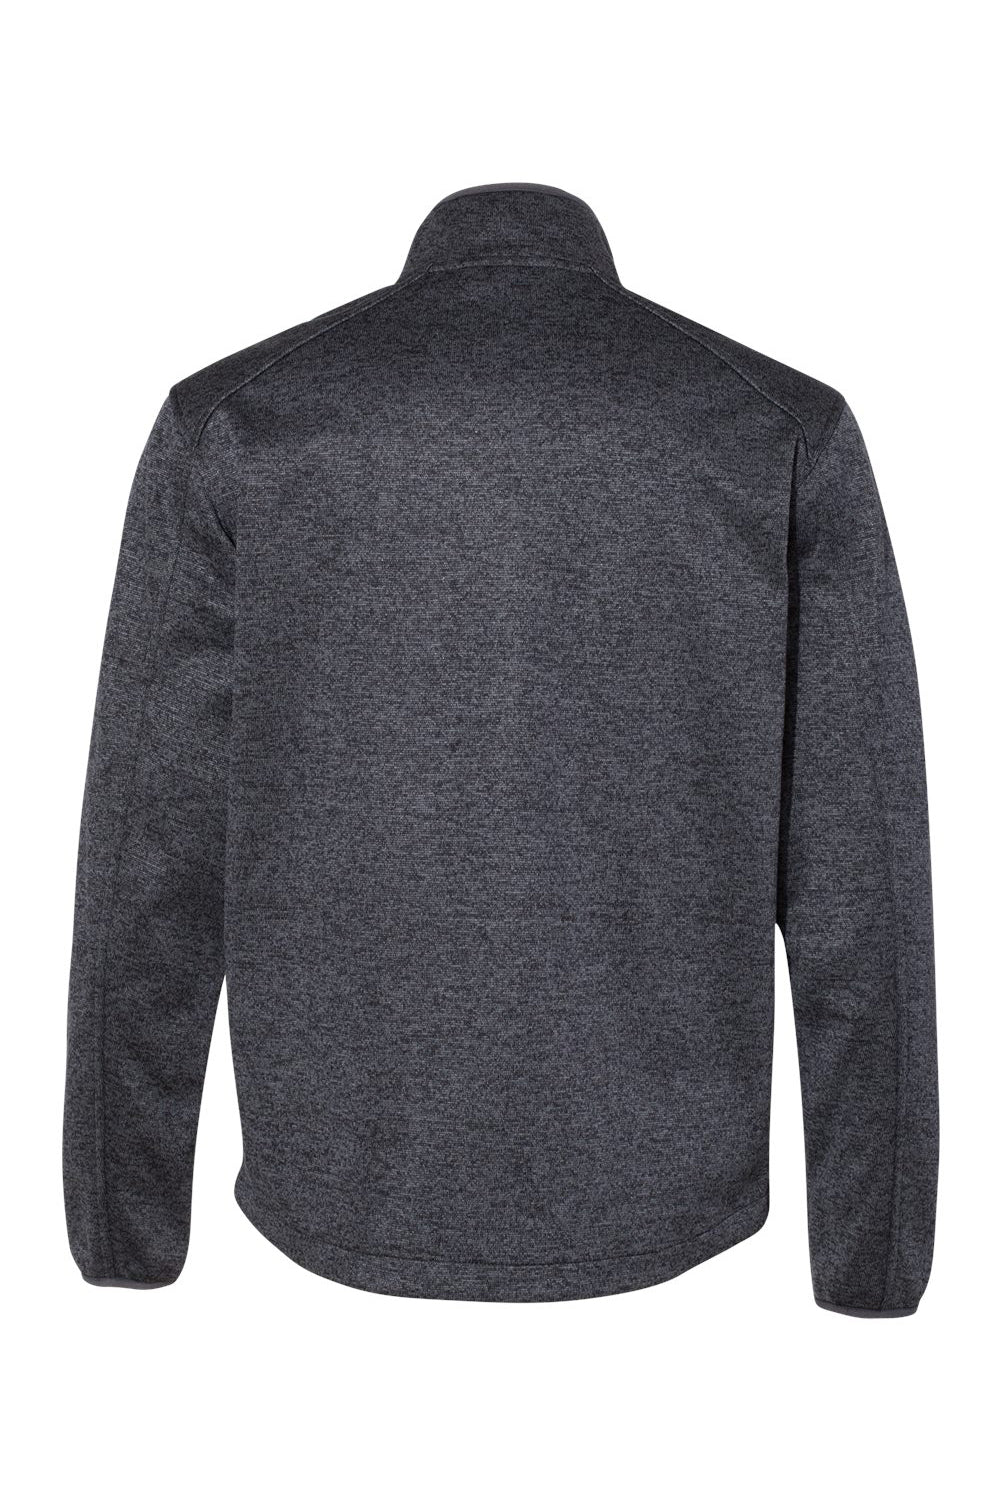 Dri Duck 5316 Mens Atlas Sweater Fleece Full Zip Jacket Charcoal Grey Flat Back